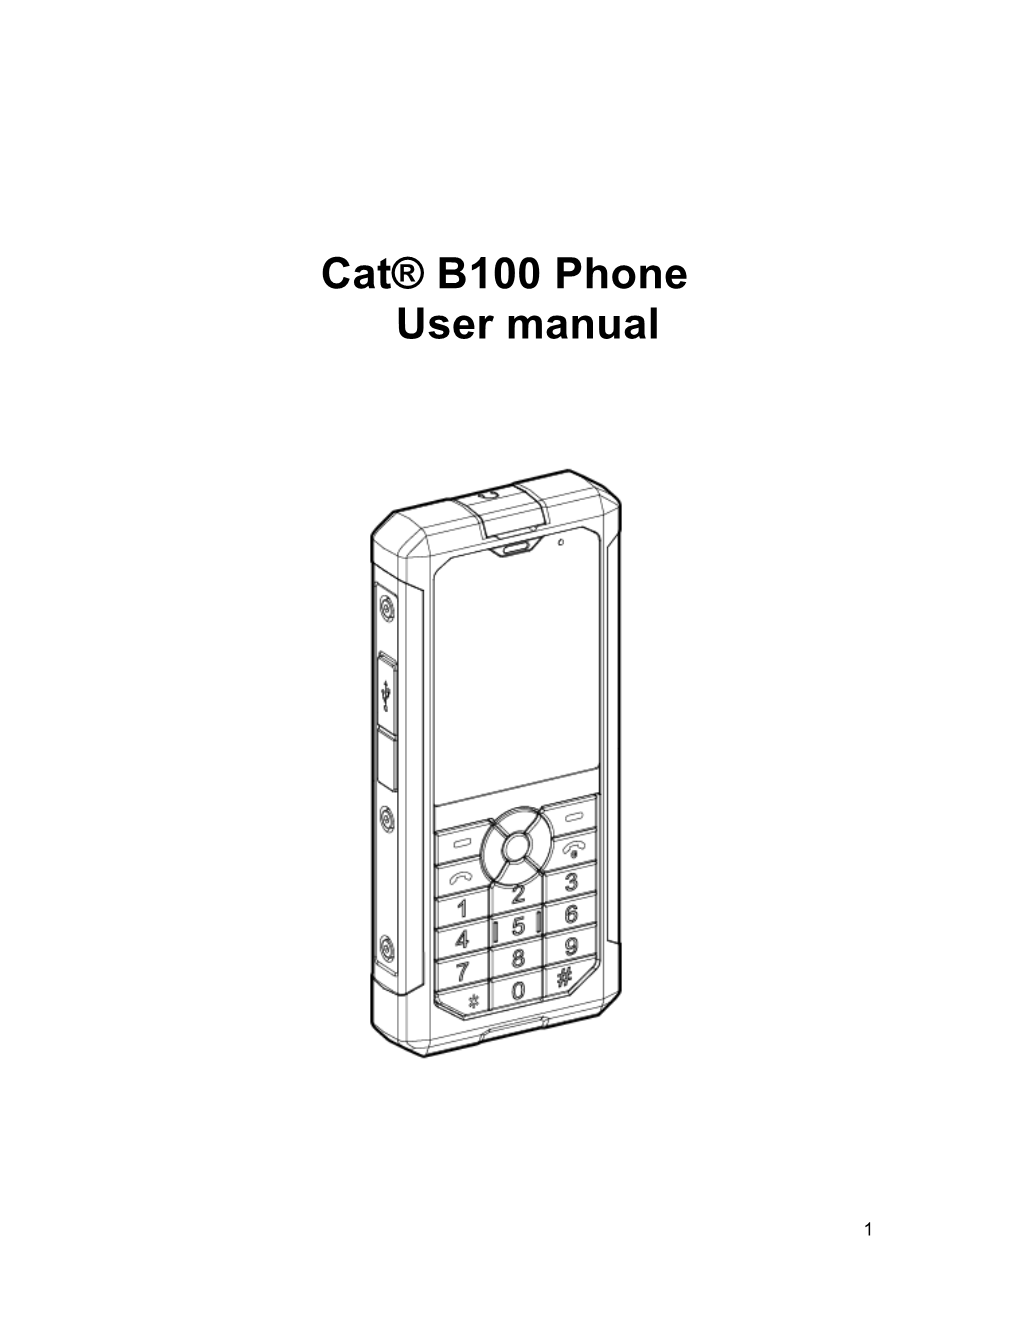 Cat® B100 Phone User Manual